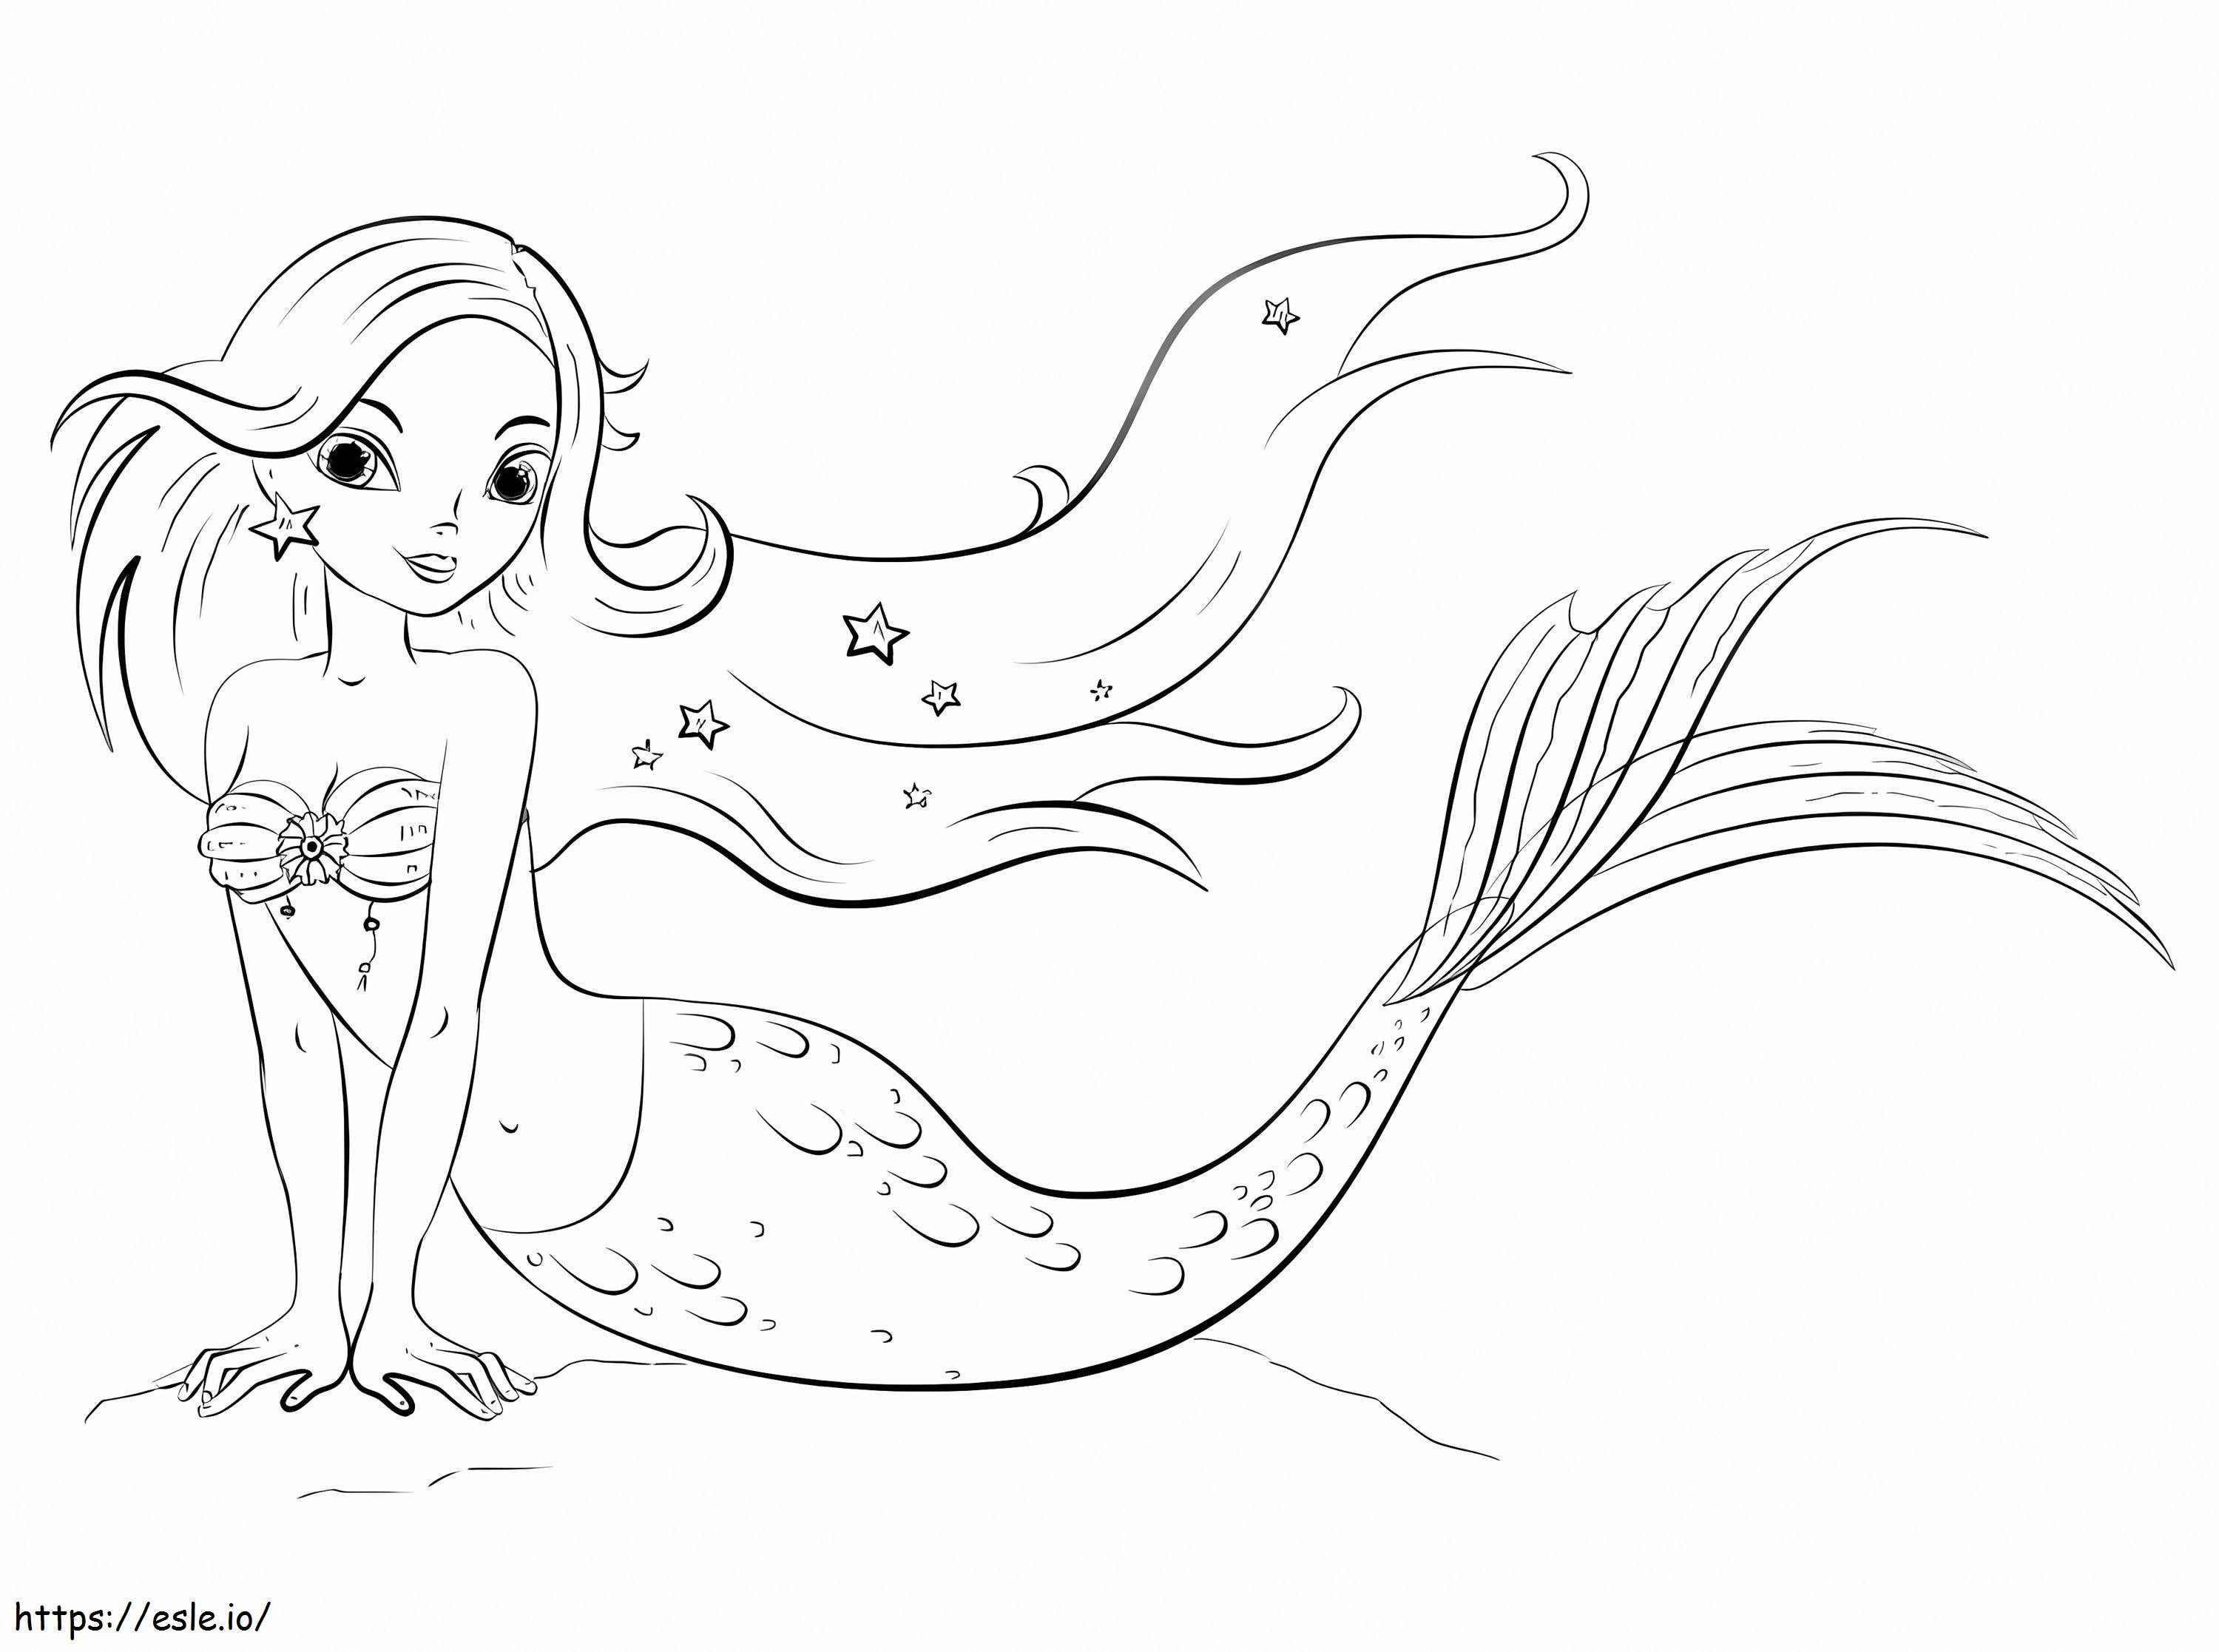 Wunderschöne Meerjungfrau ausmalbilder